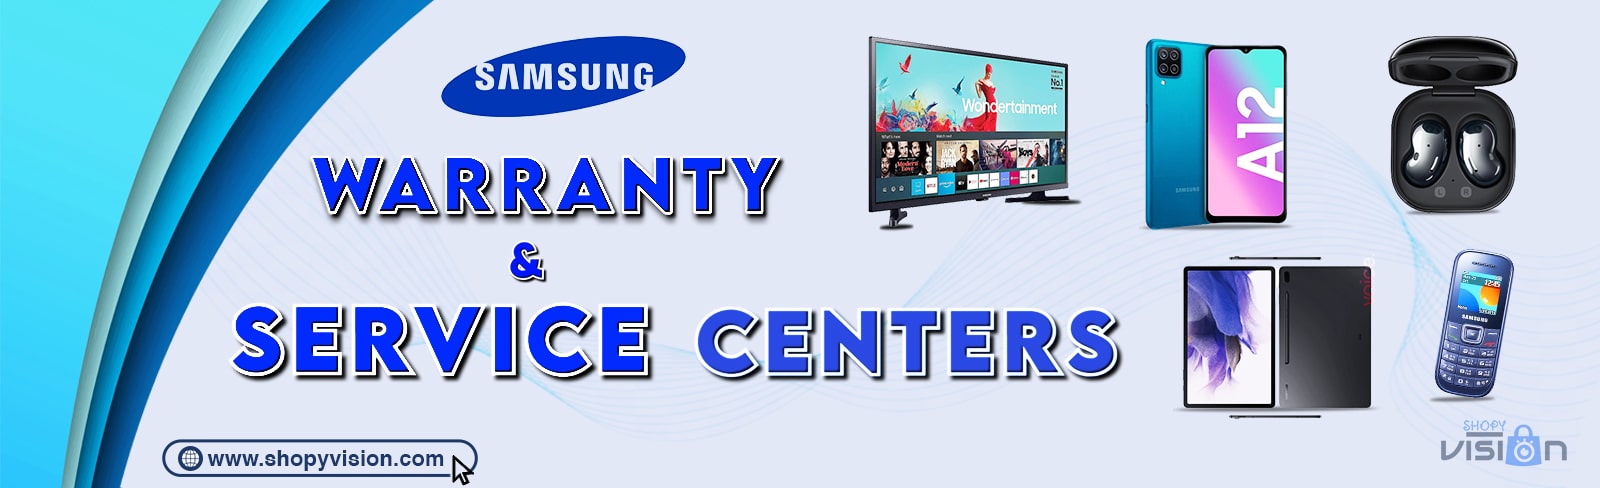 Samsung Warranty & Service Center in India